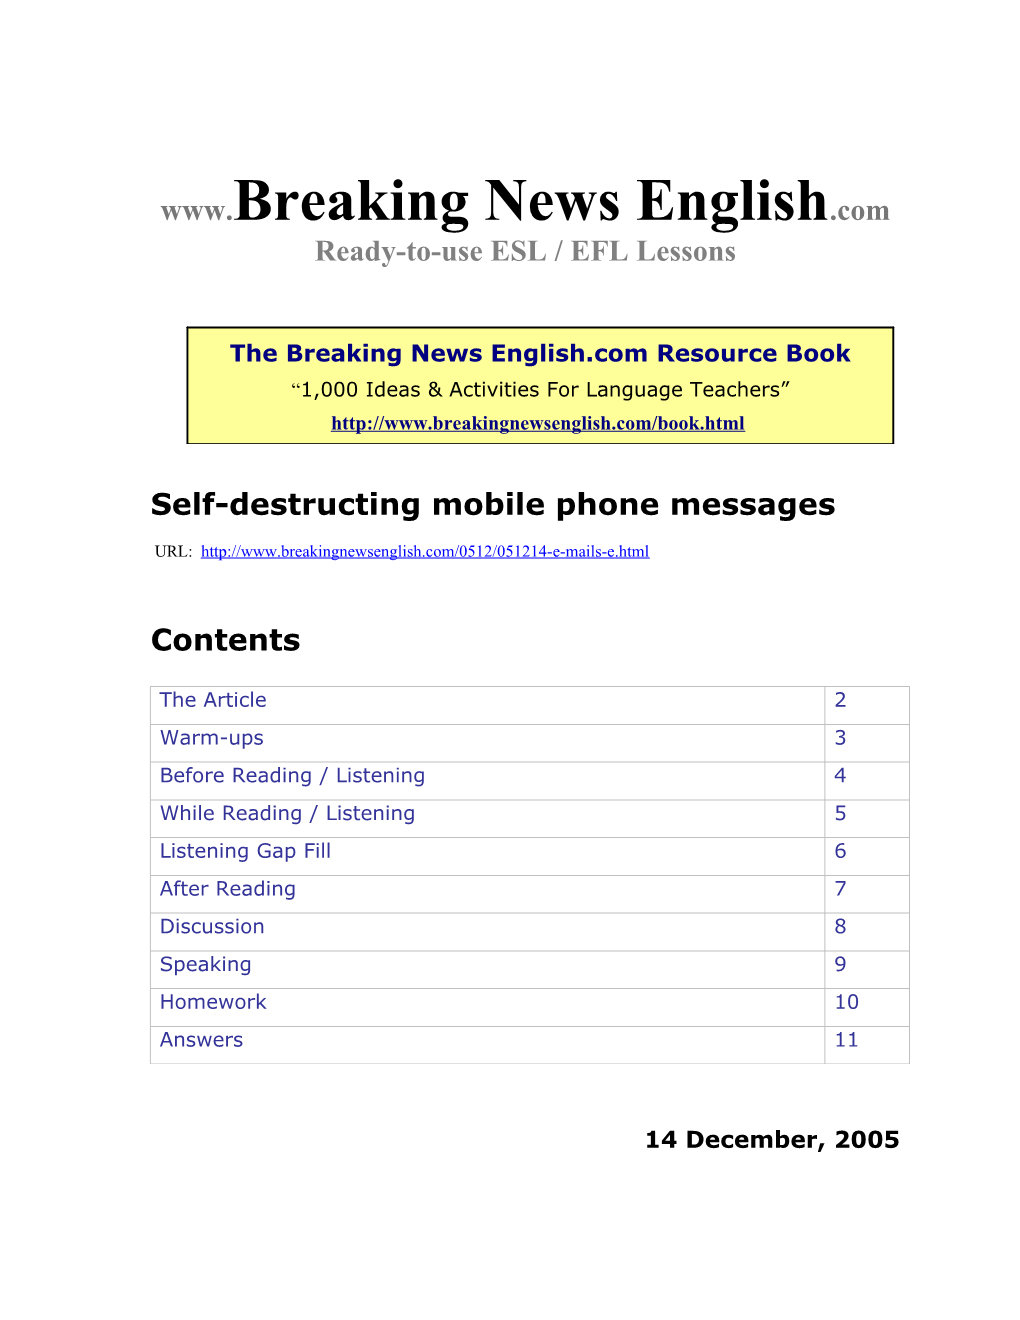 Self-Destructing Mobile Phone Messages